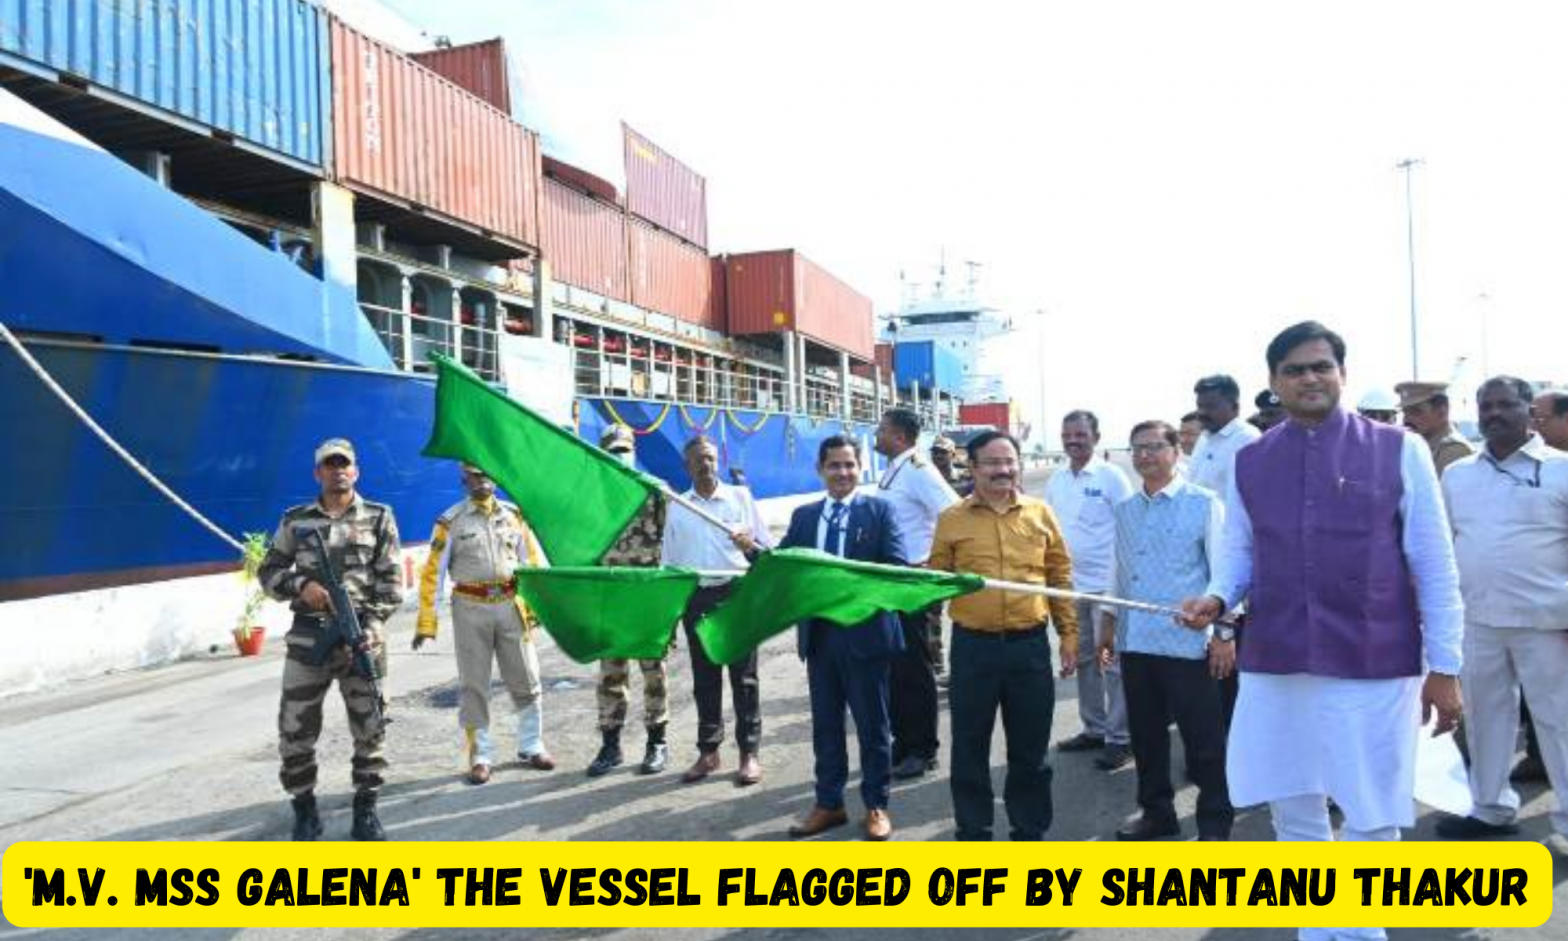 'M.V. MSS Galena' the vessel flagged off by Shantanu Thakur